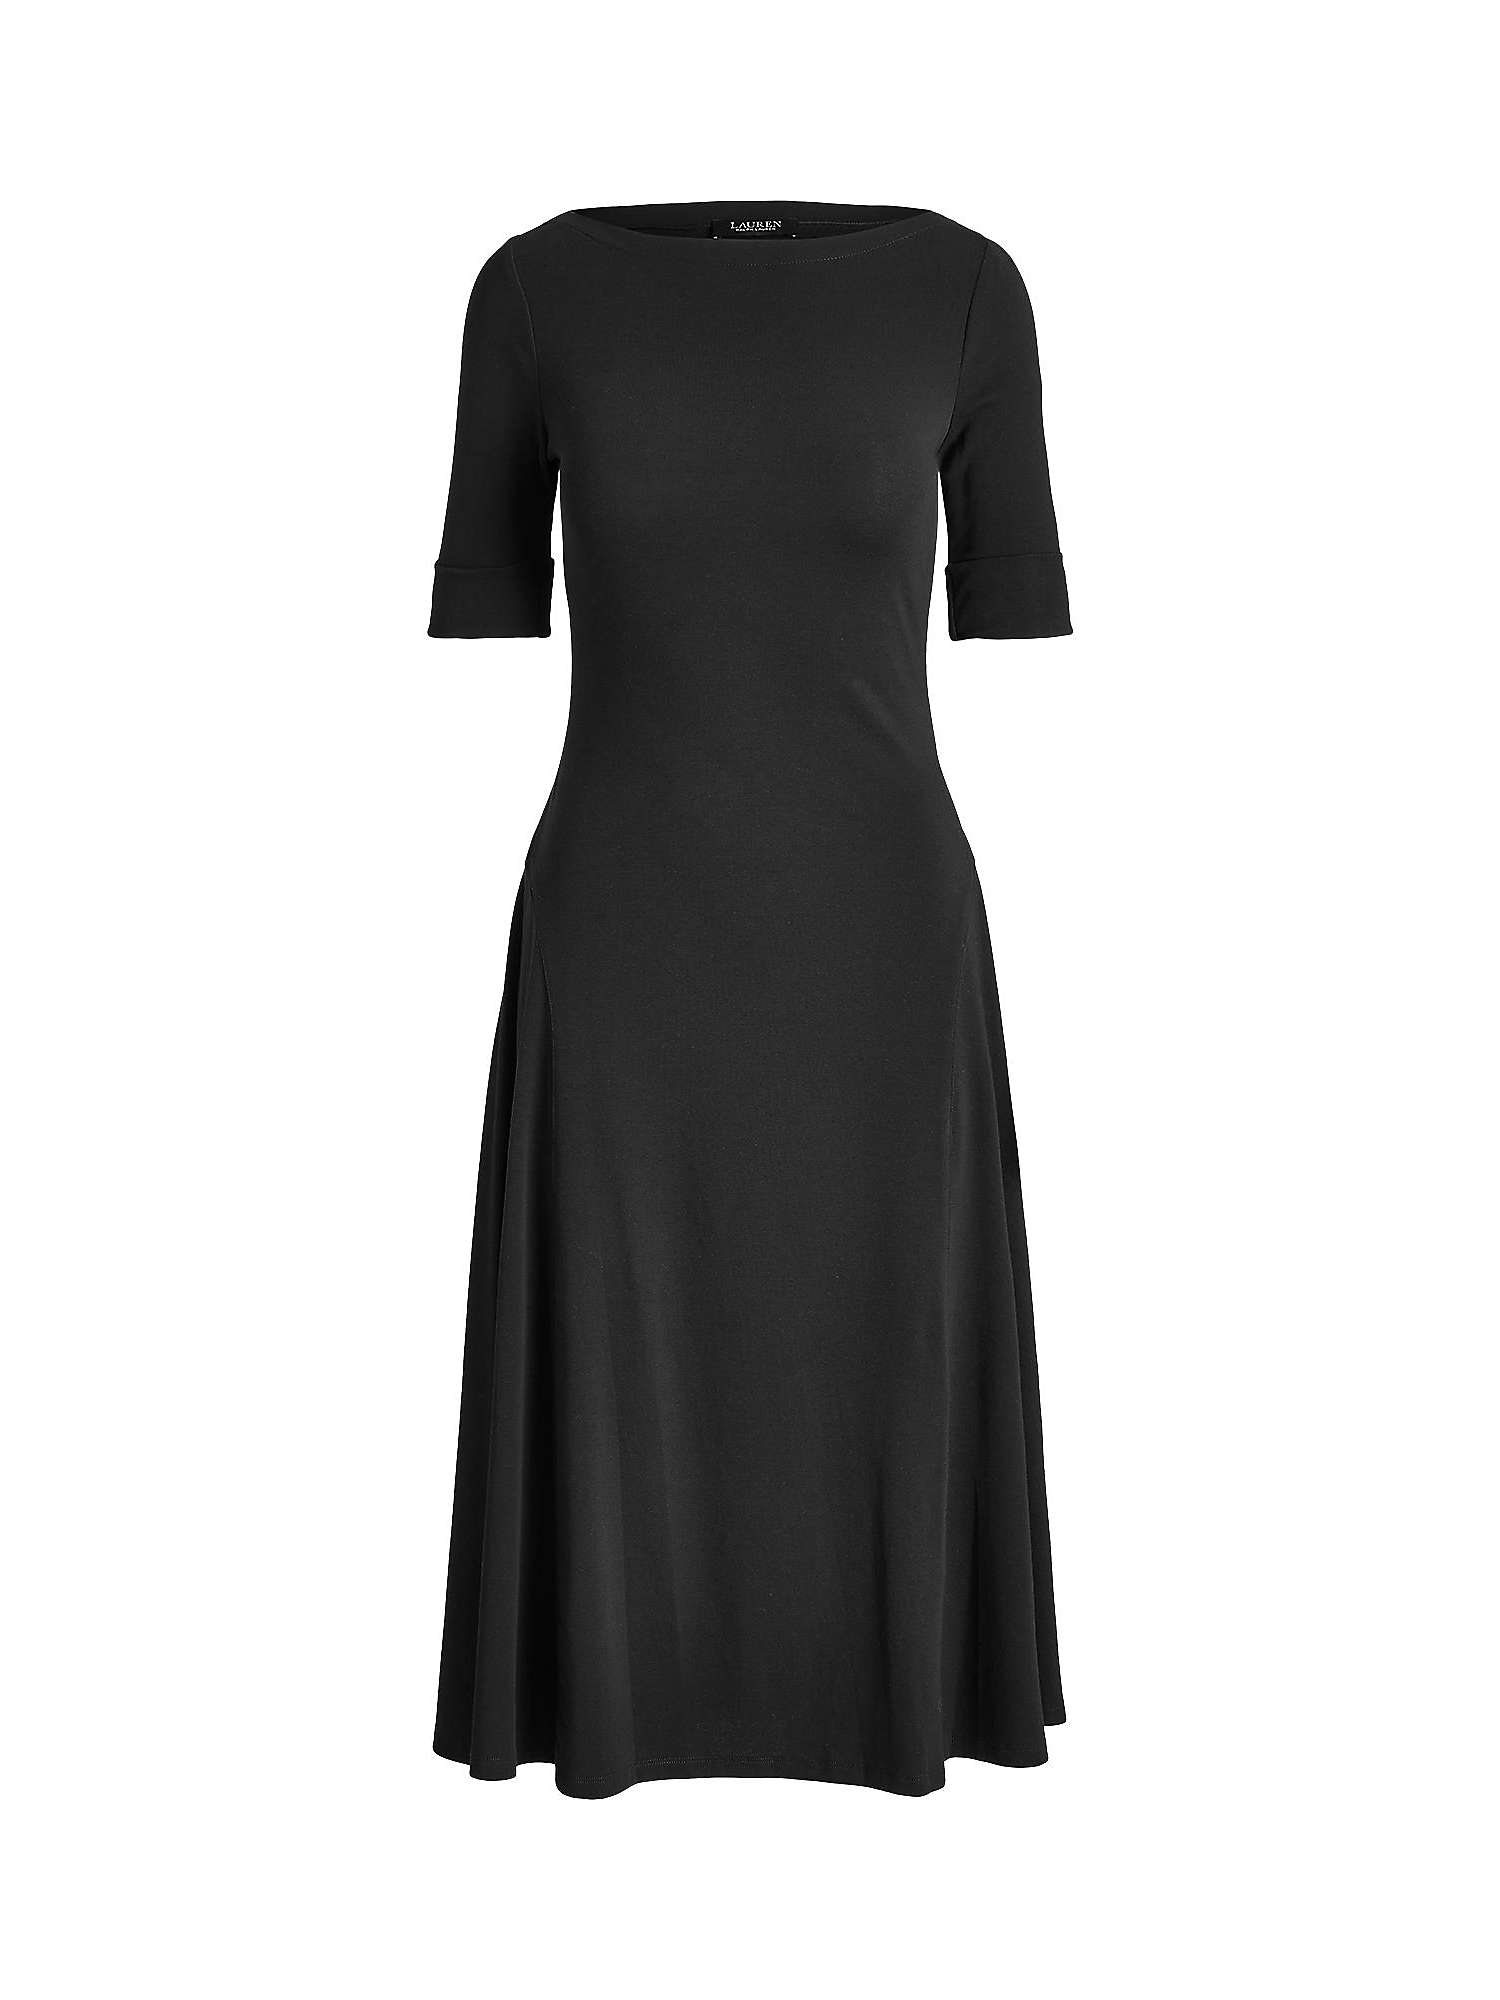 Buy Lauren Ralph Lauren Munzie Fit & Flare Dress, Black Online at johnlewis.com